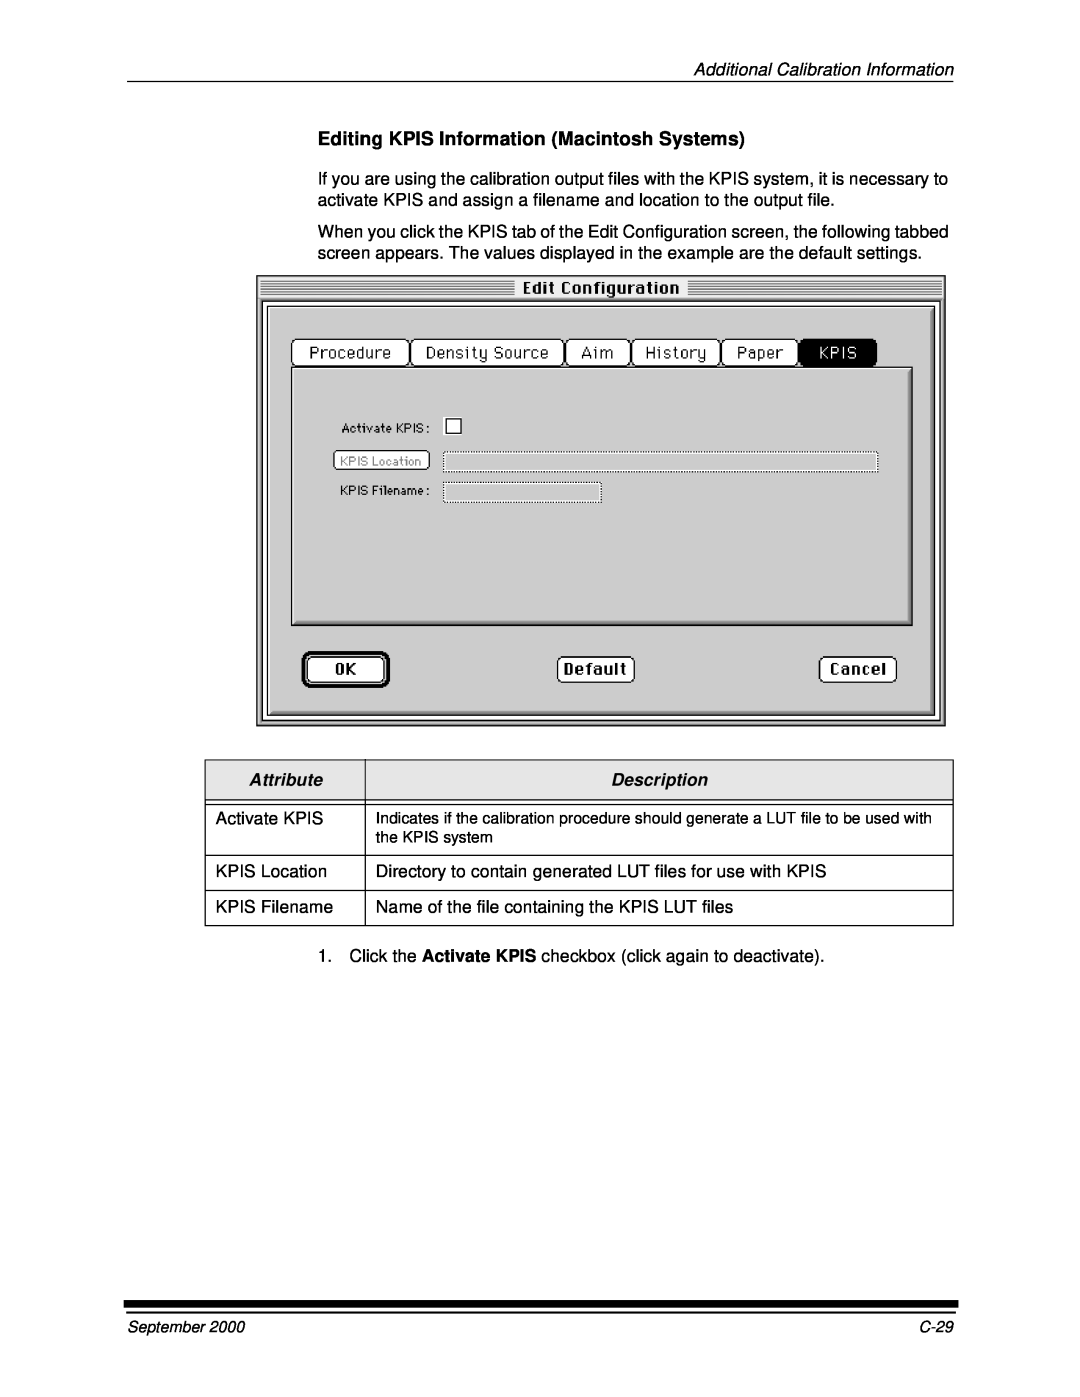 Kodak 20P manual Editing KPIS Information Macintosh Systems, Additional Calibration Information, Attribute, Description 